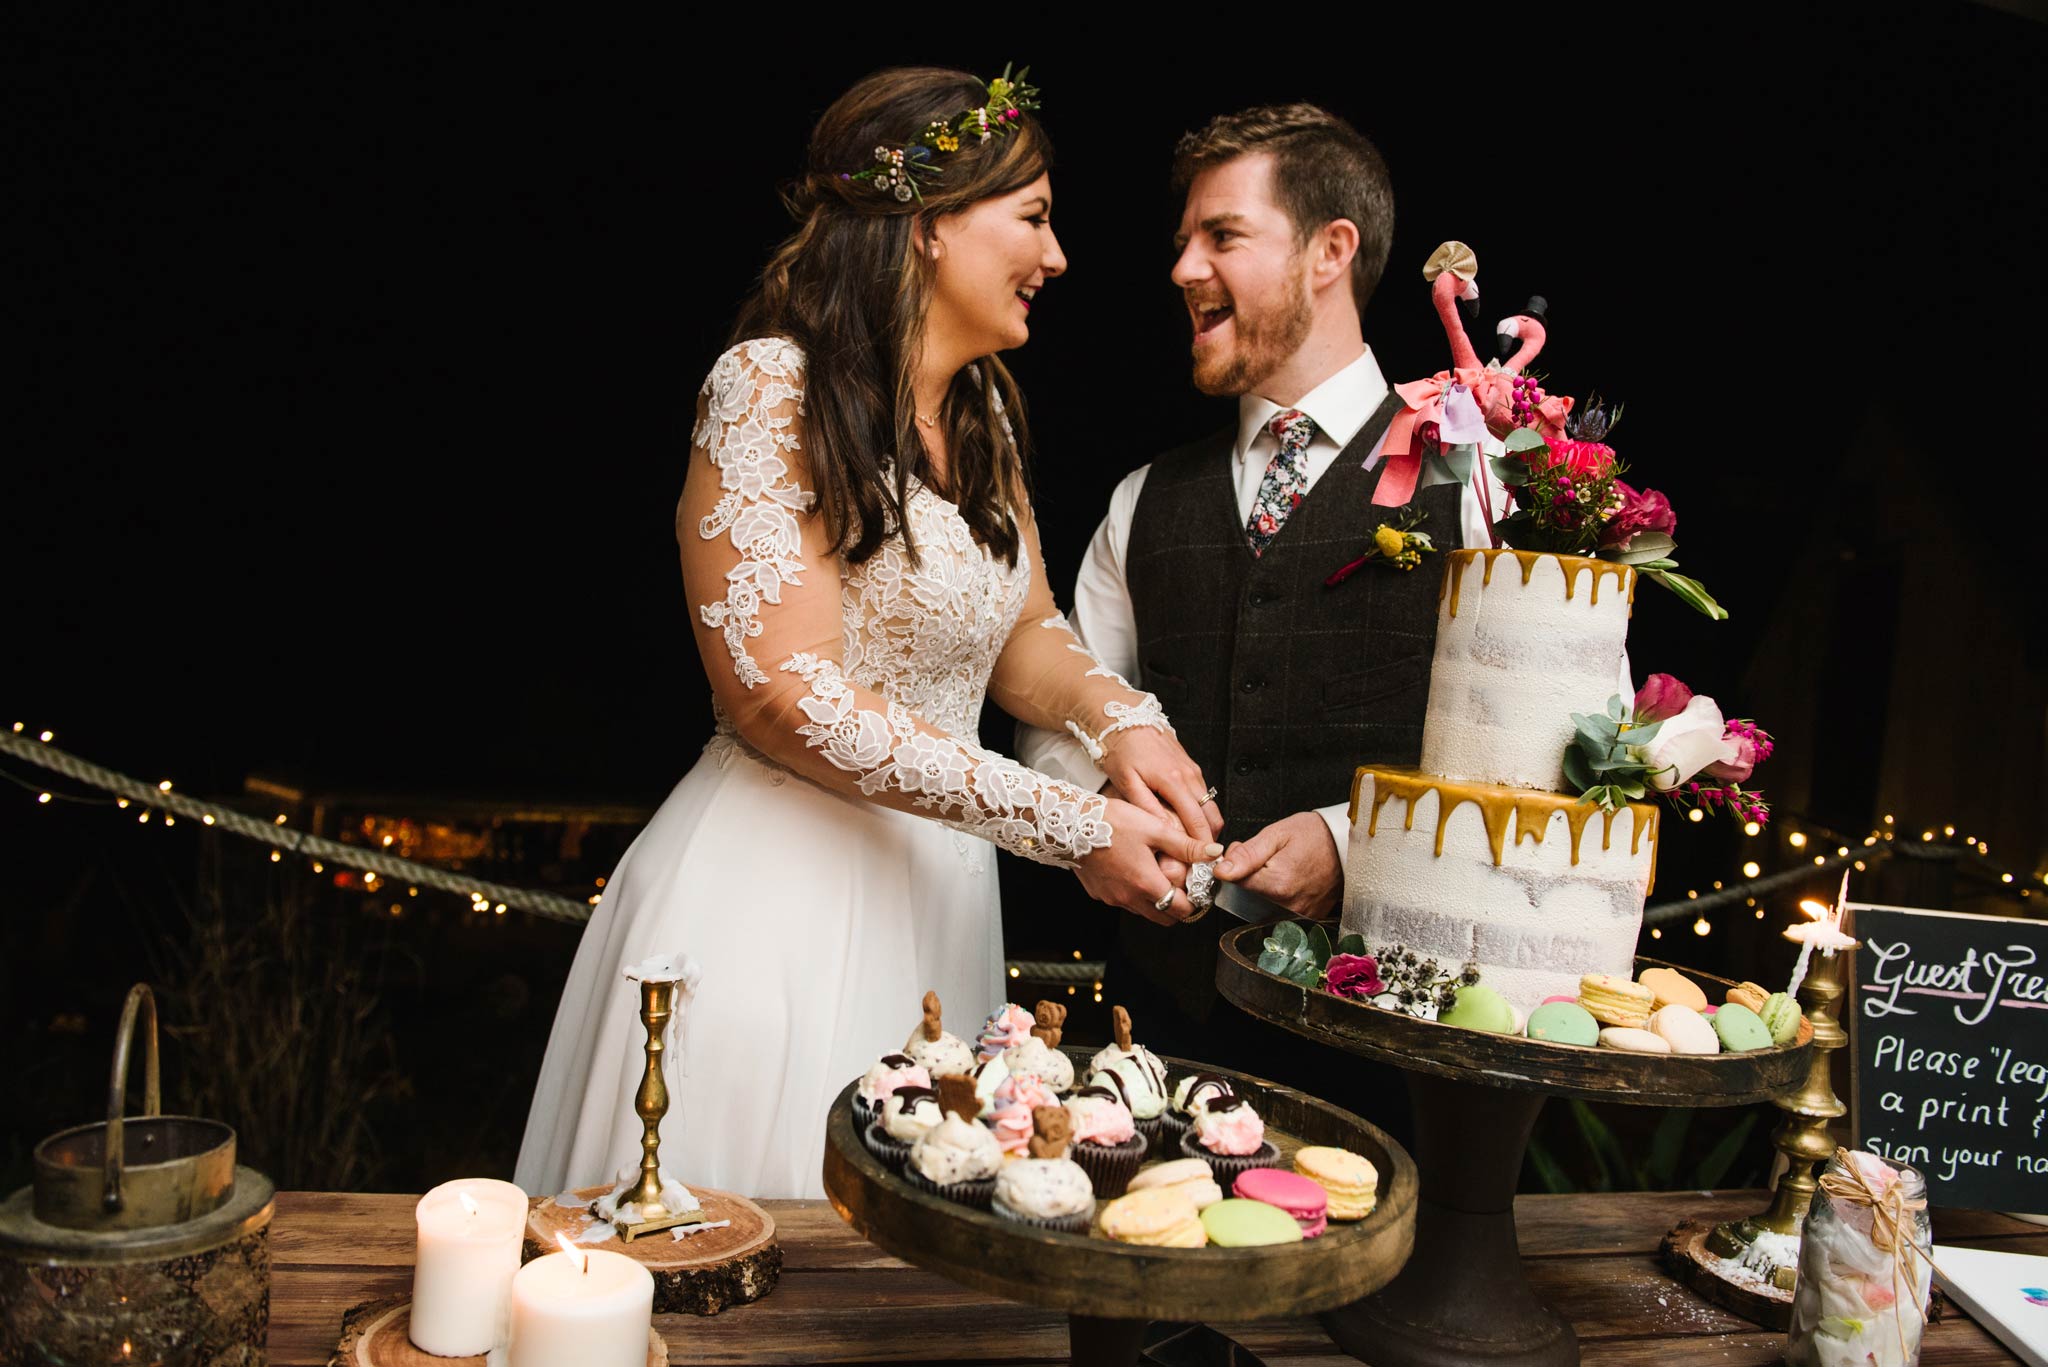 Whimsical wedding cake with flamingo topper